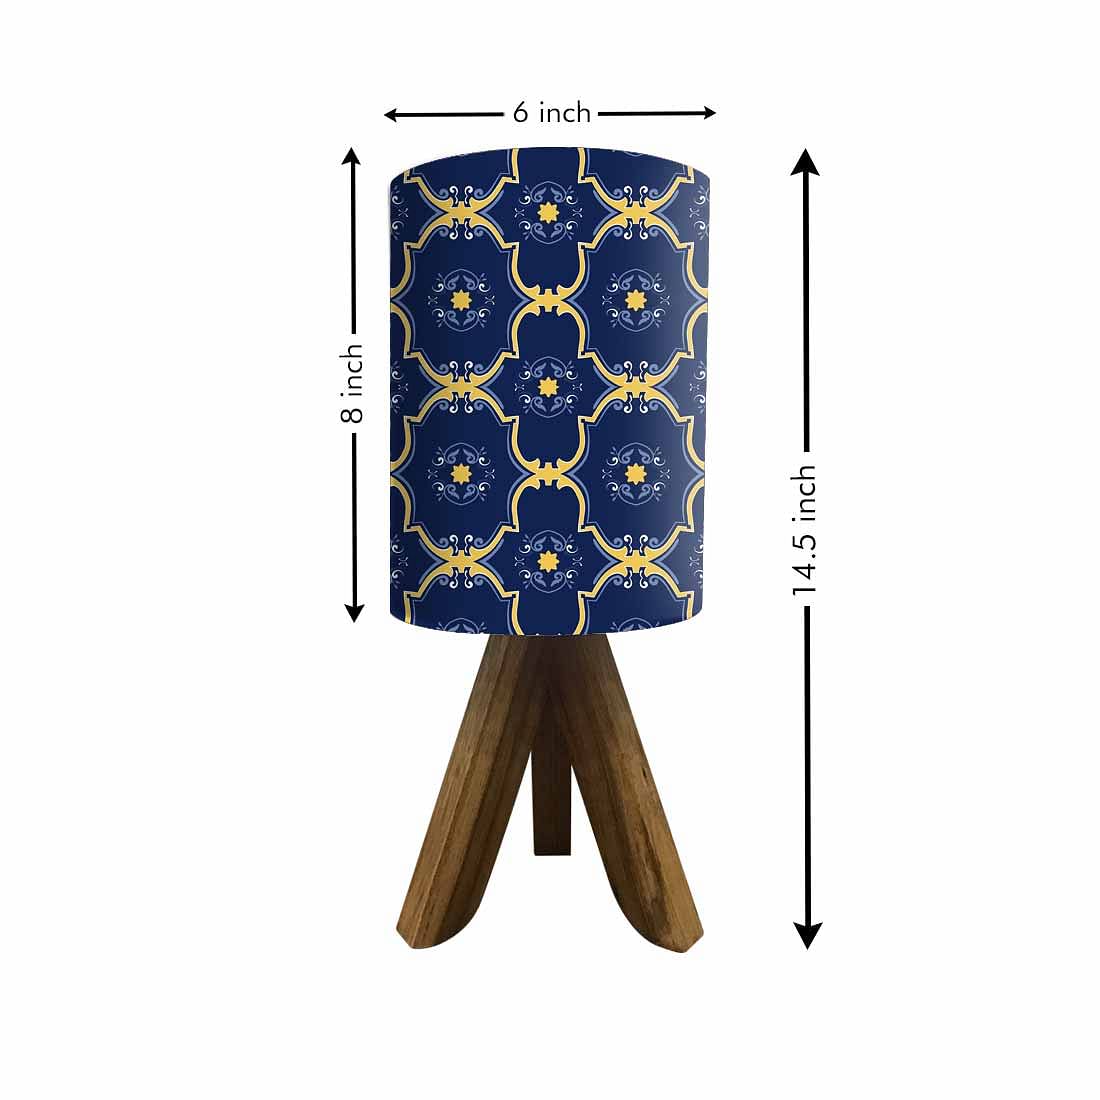 Sheesham Wood Lamp Table For Bedroom - Yellow Blue Tiles Design Nutcase